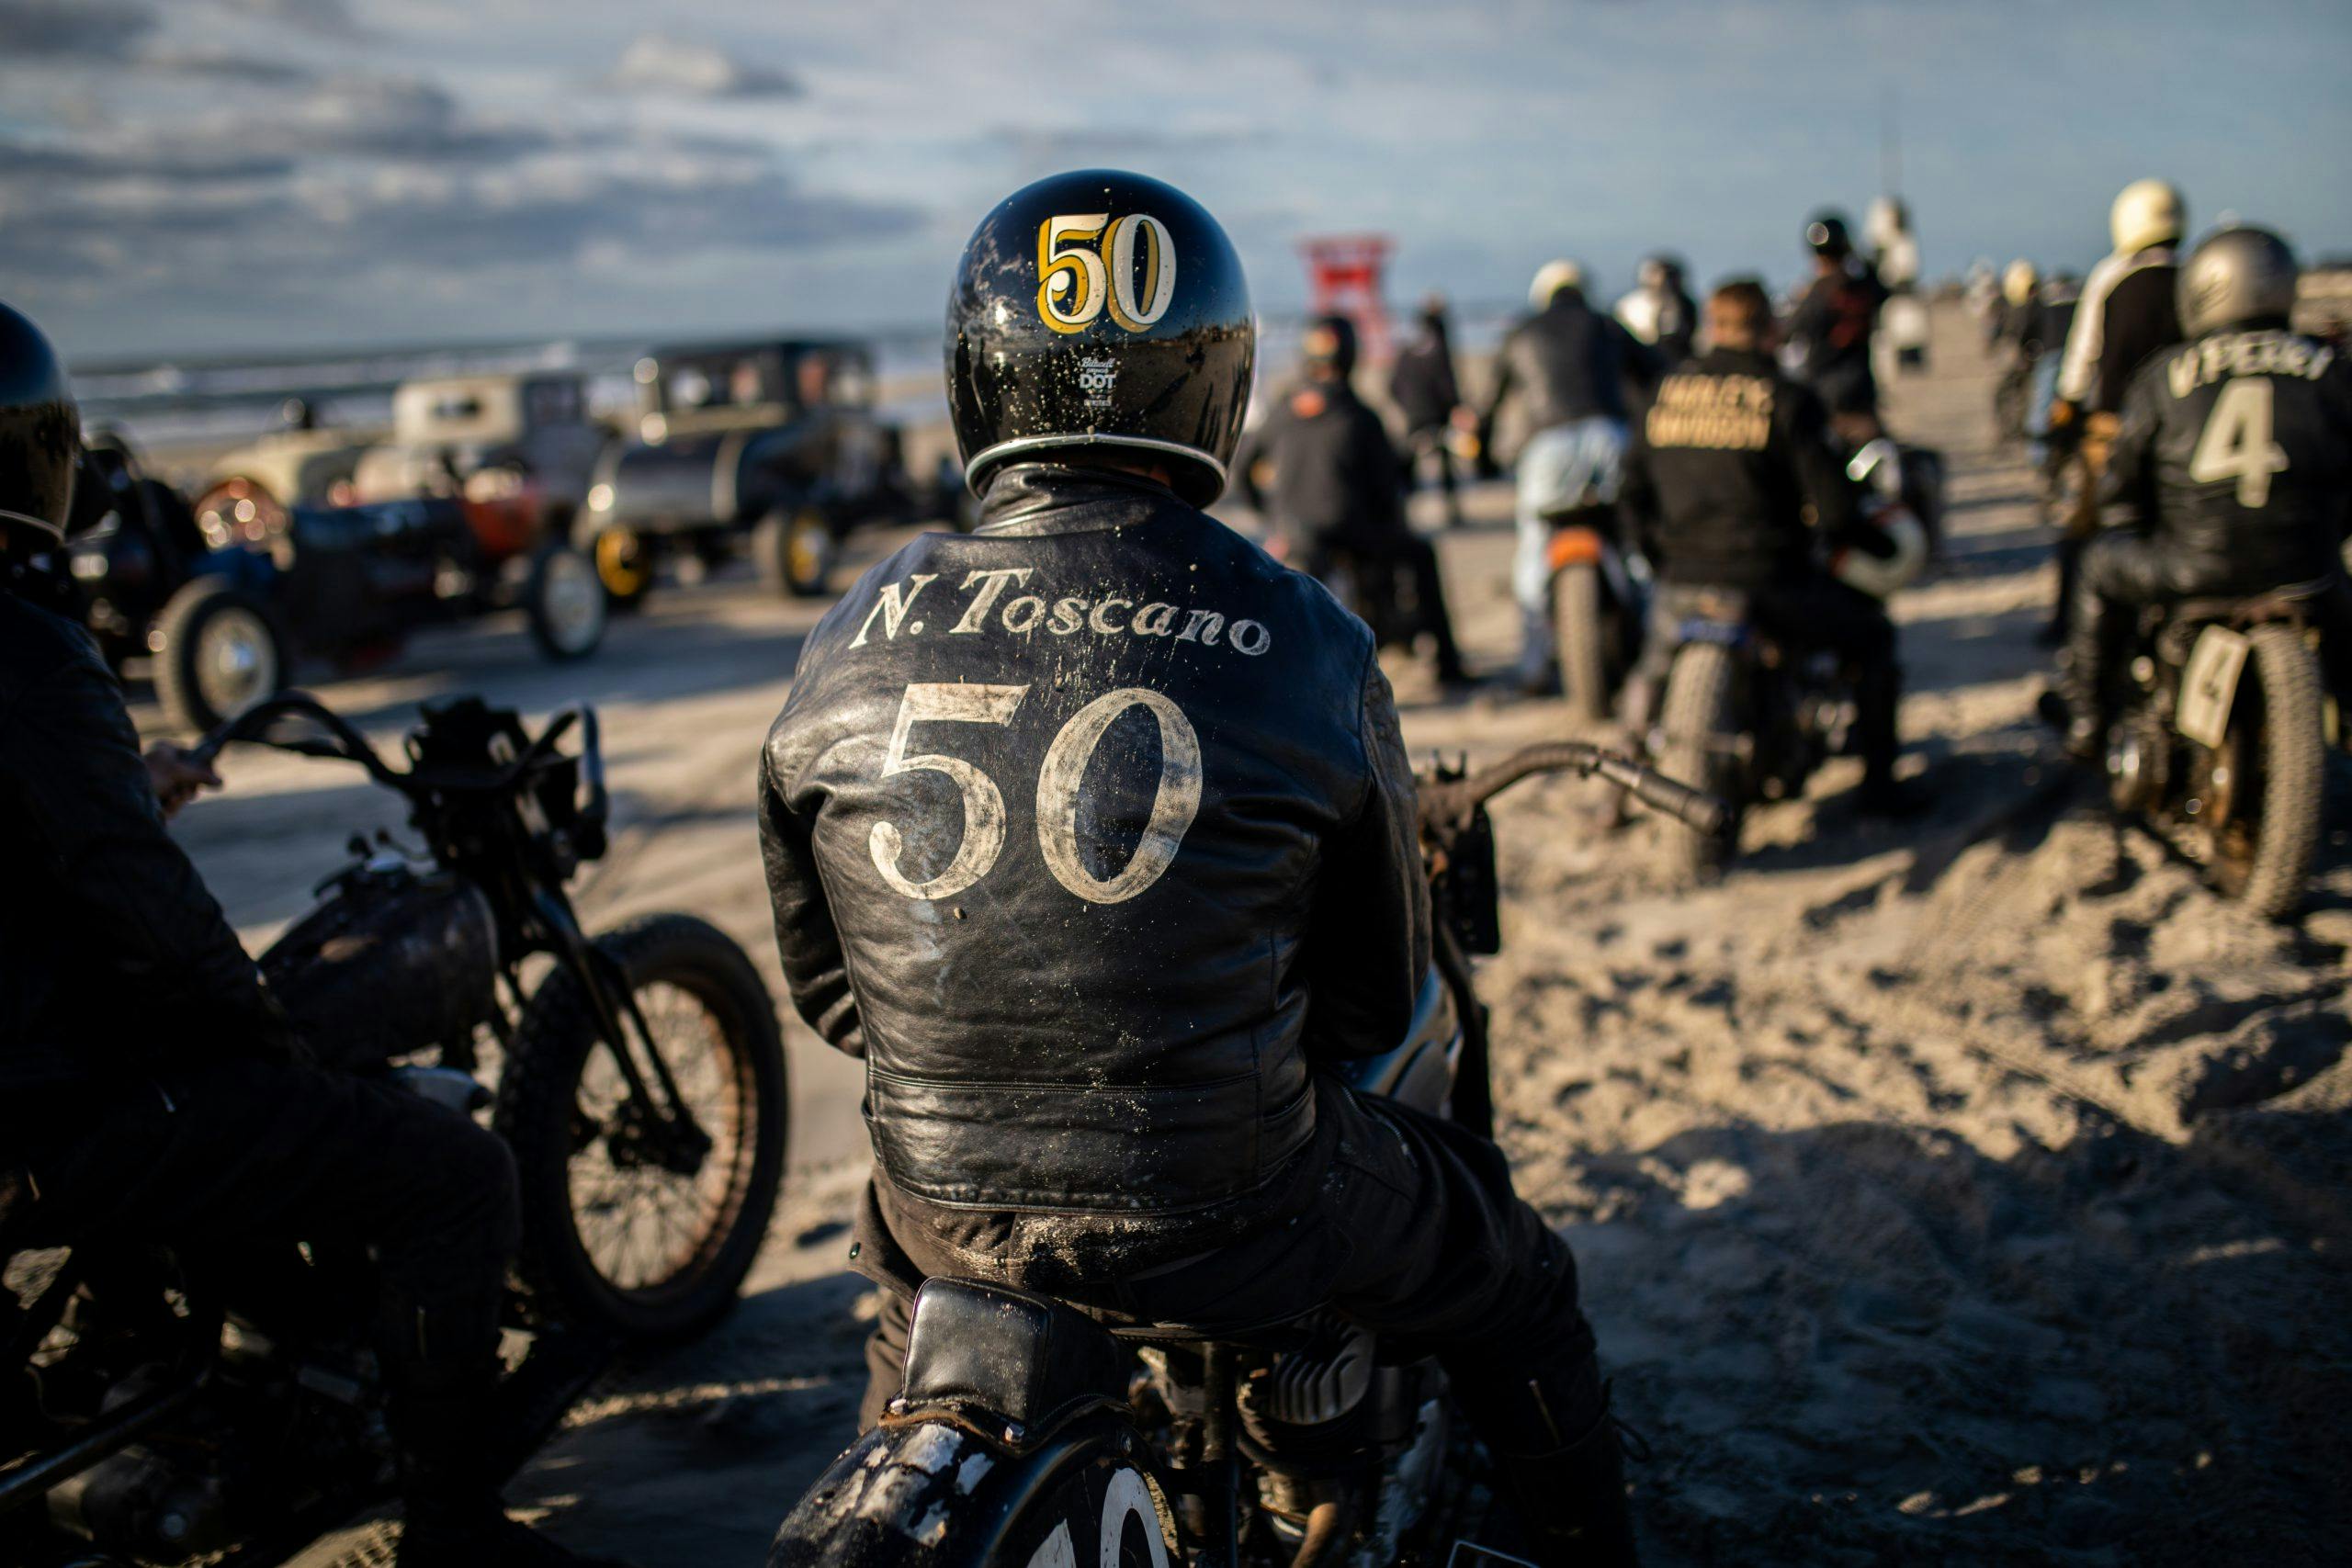 motorbike beach drag racing